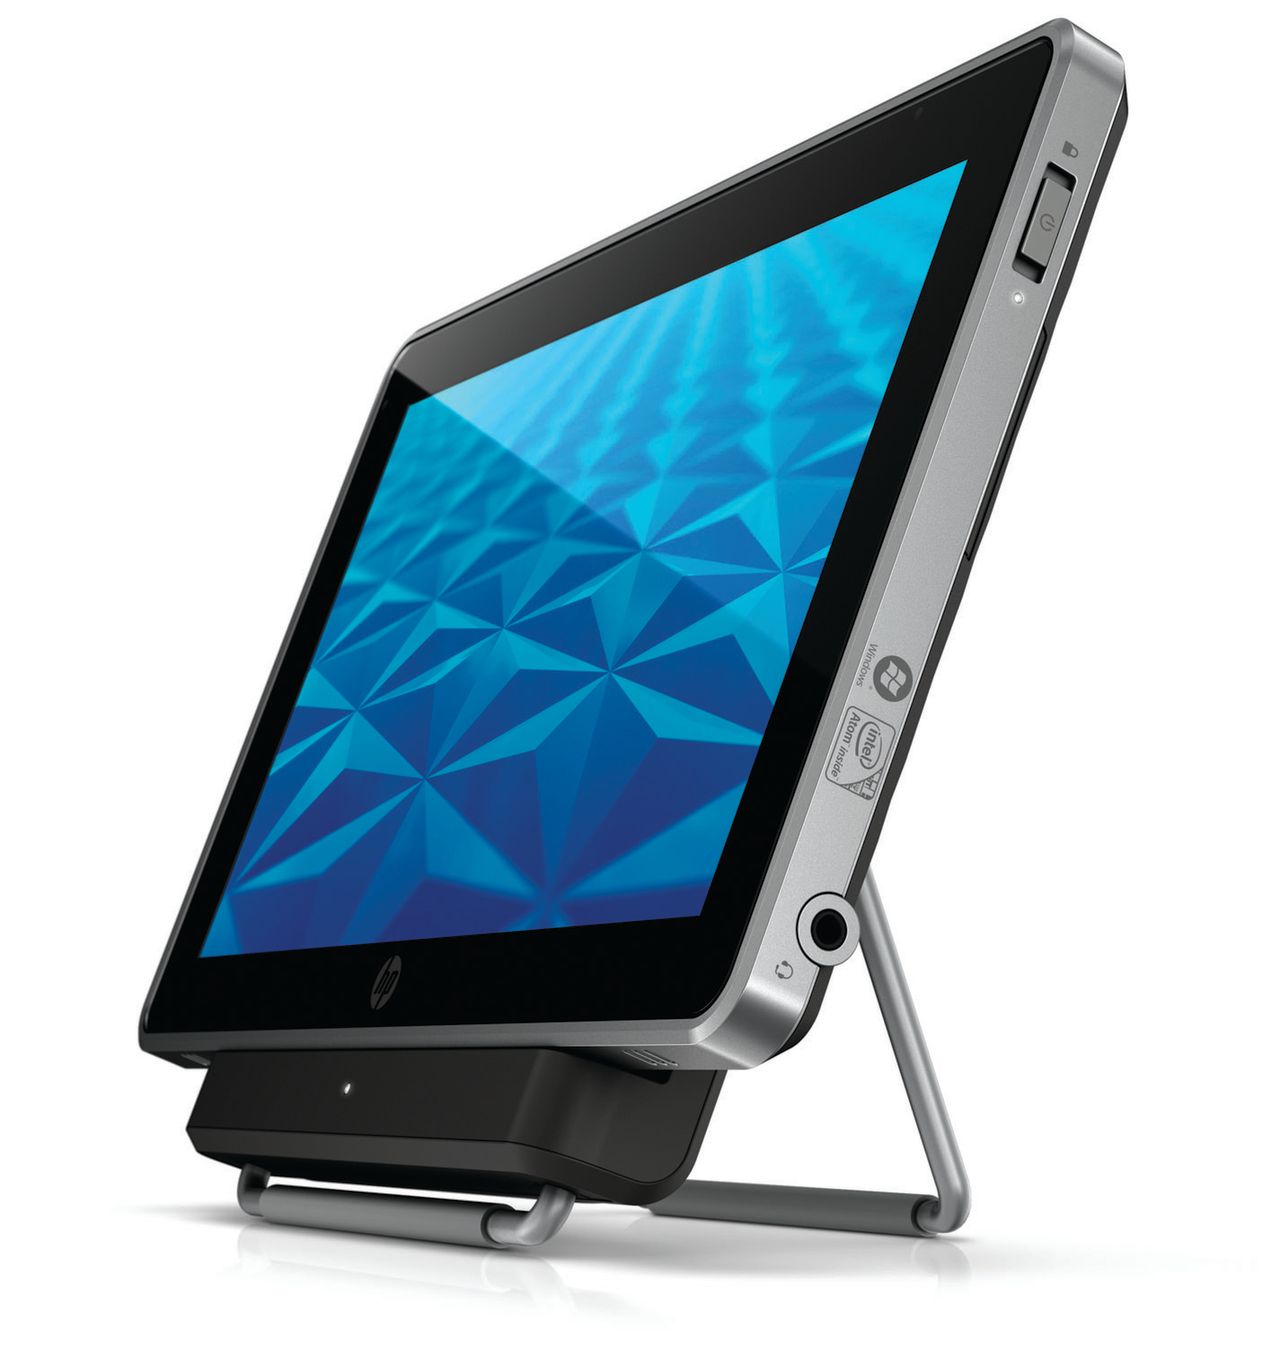 HP Slate 500 - a jednak będzie tablet z Windows 7